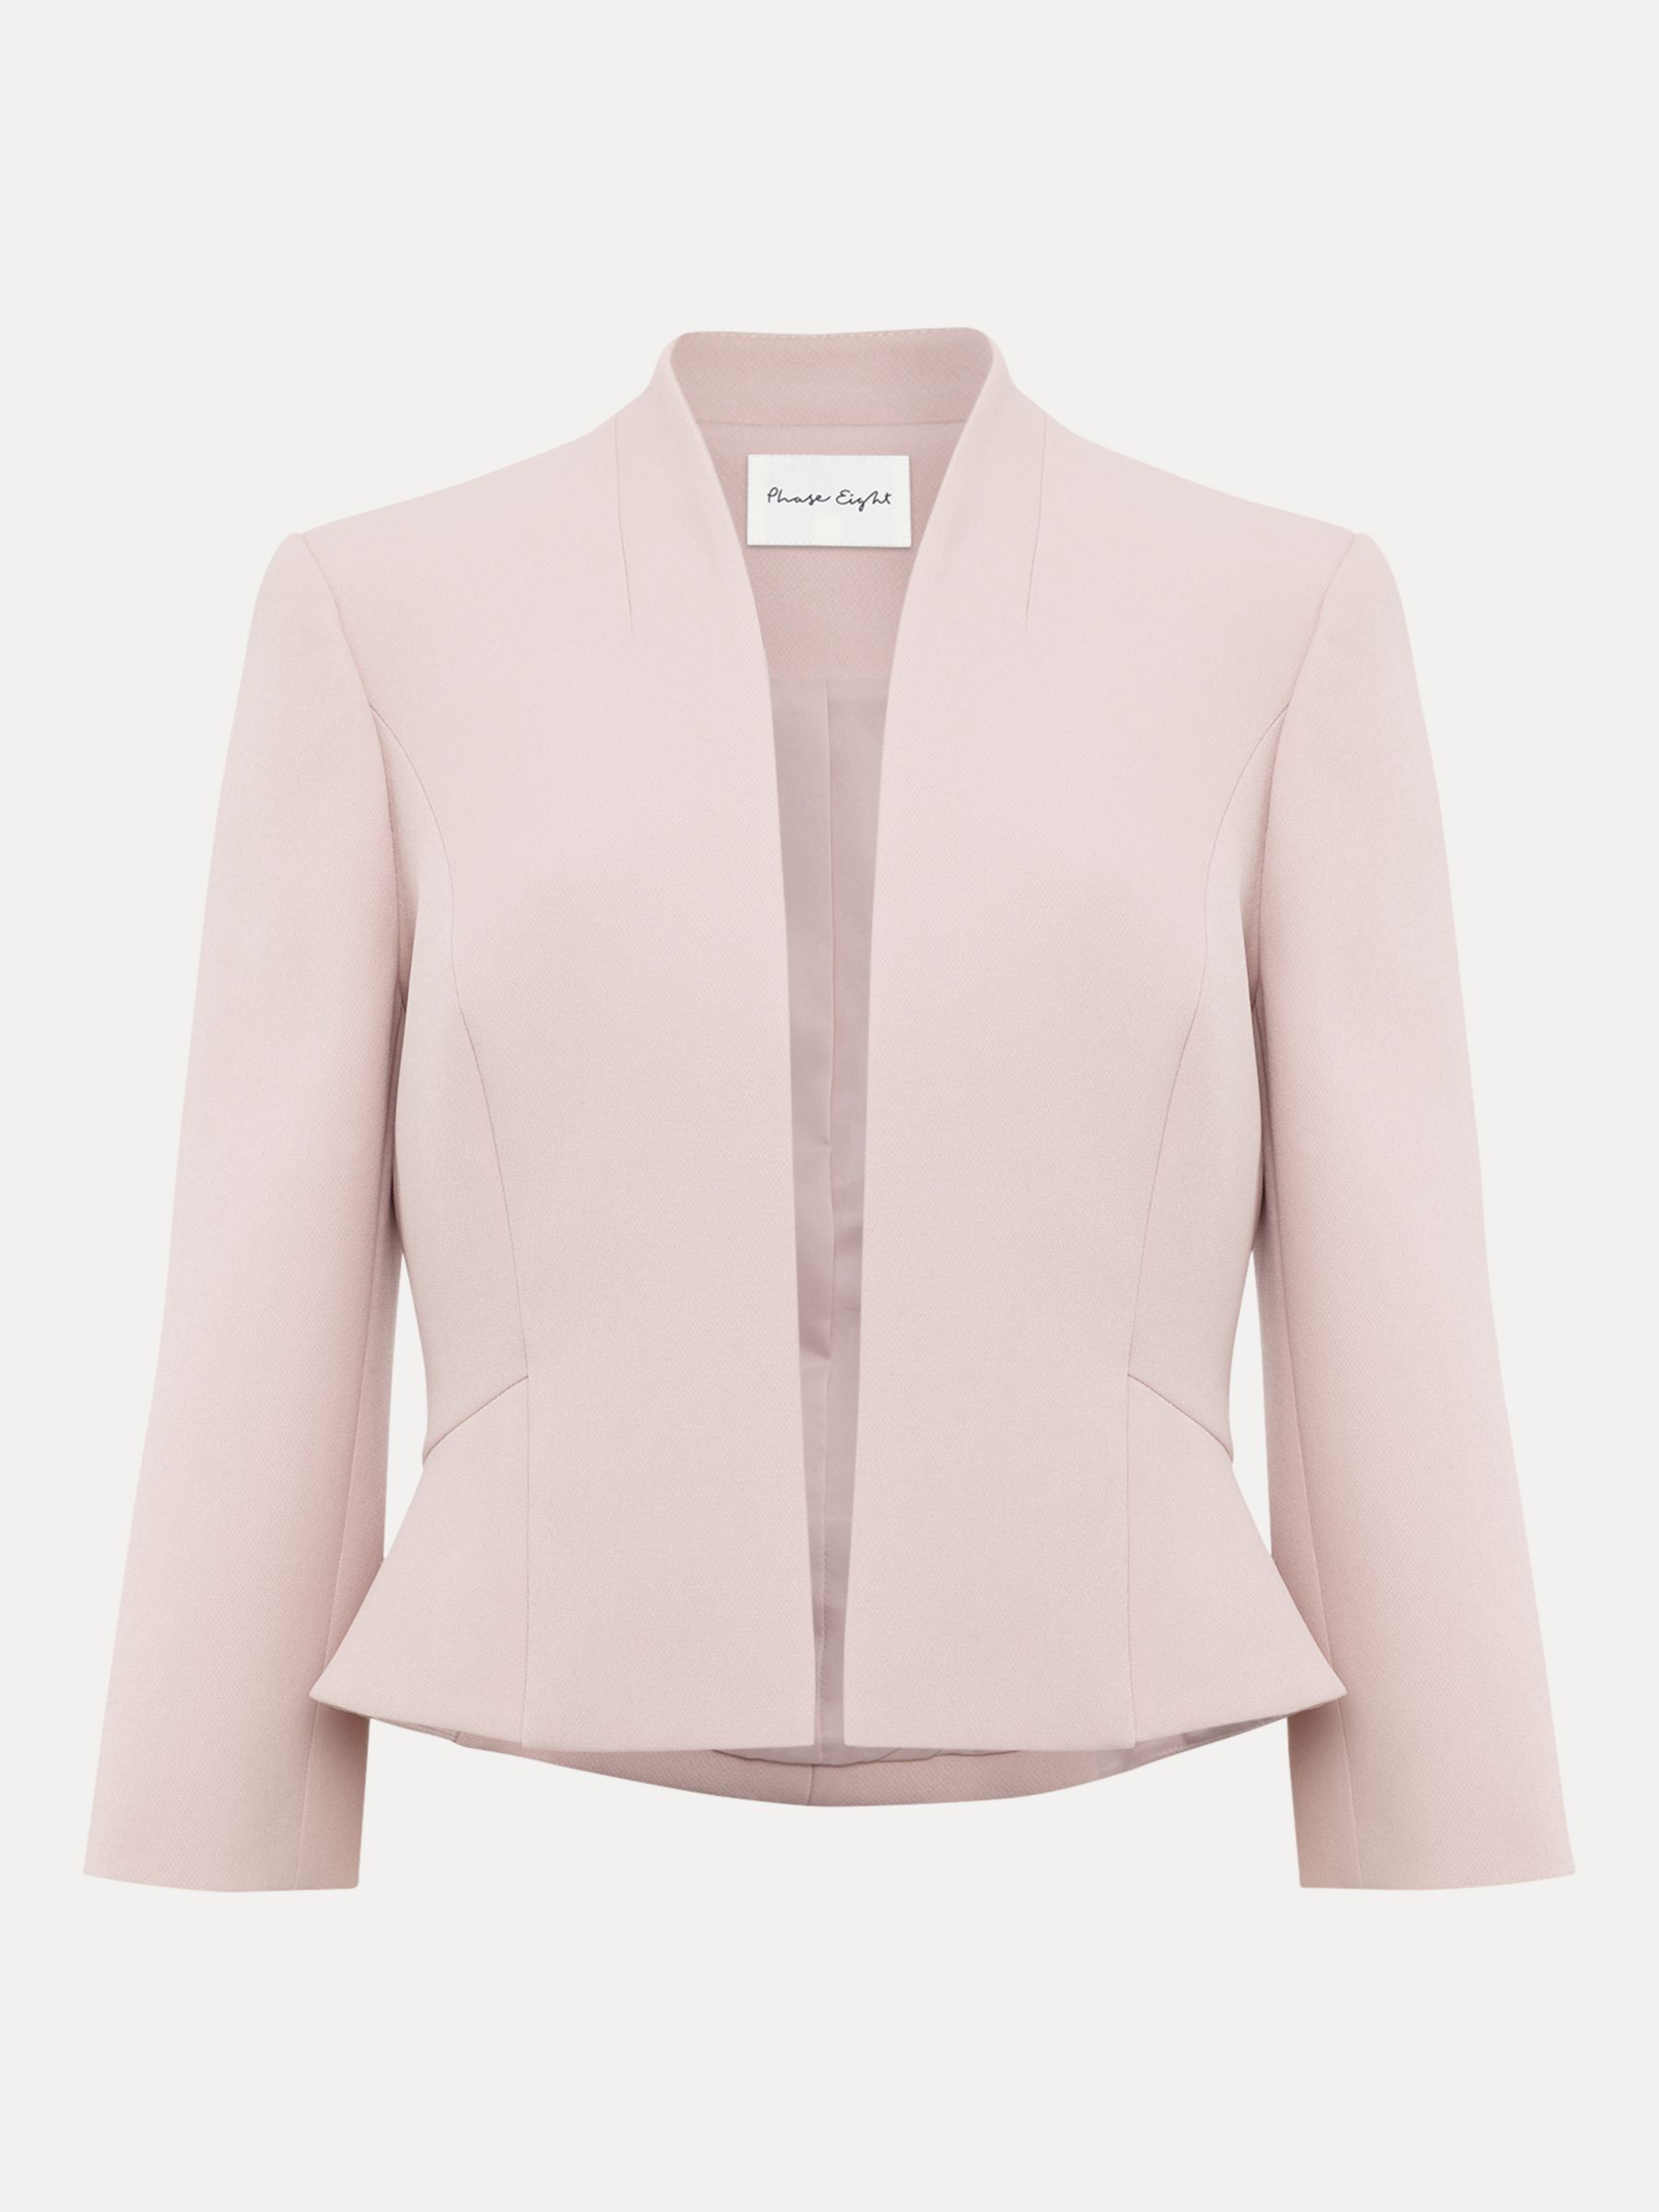 Women's Pink Coats & Jackets